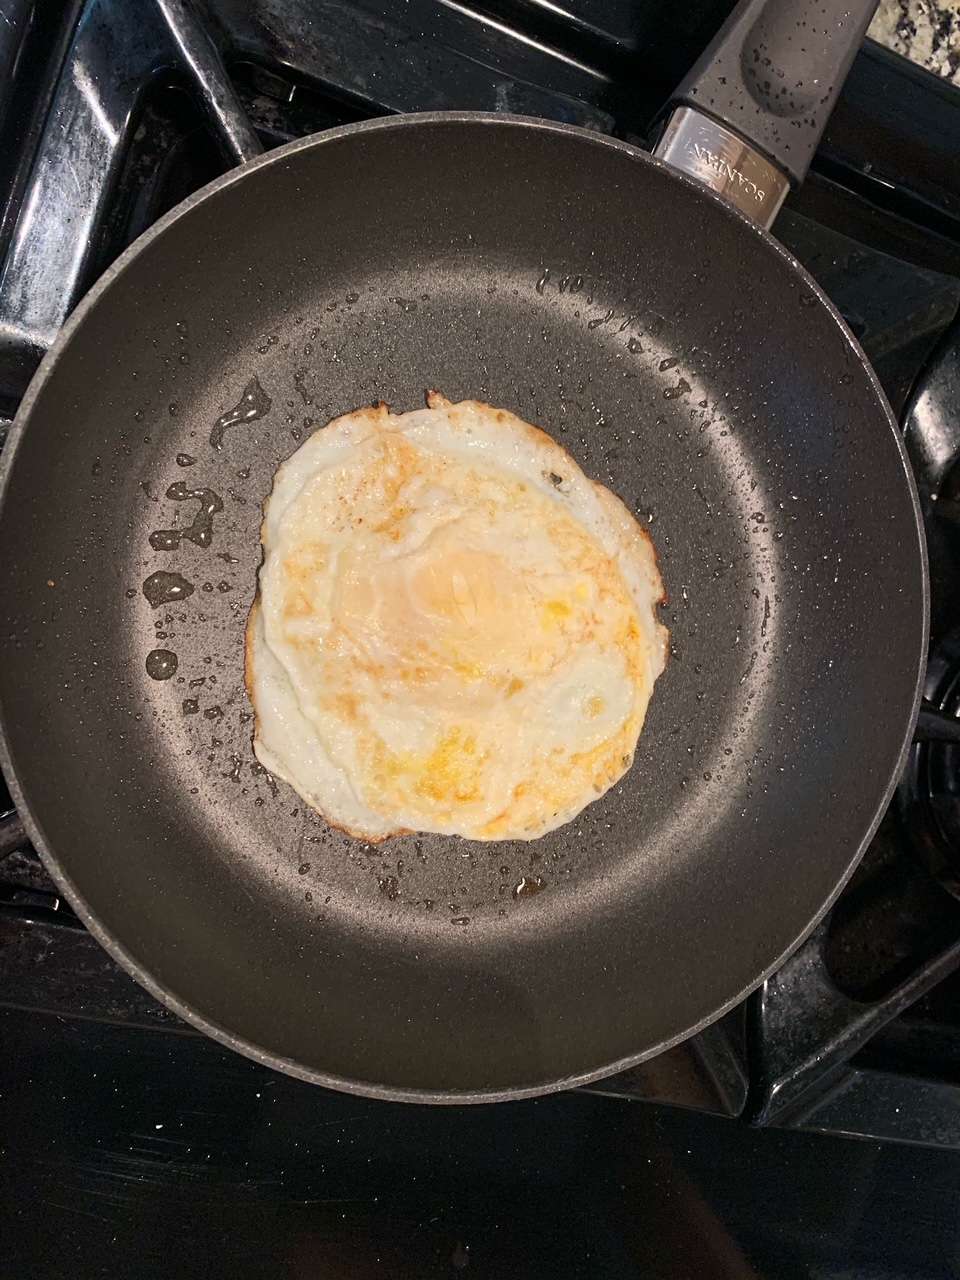 Frying an egg is so easy in a Teflon pan